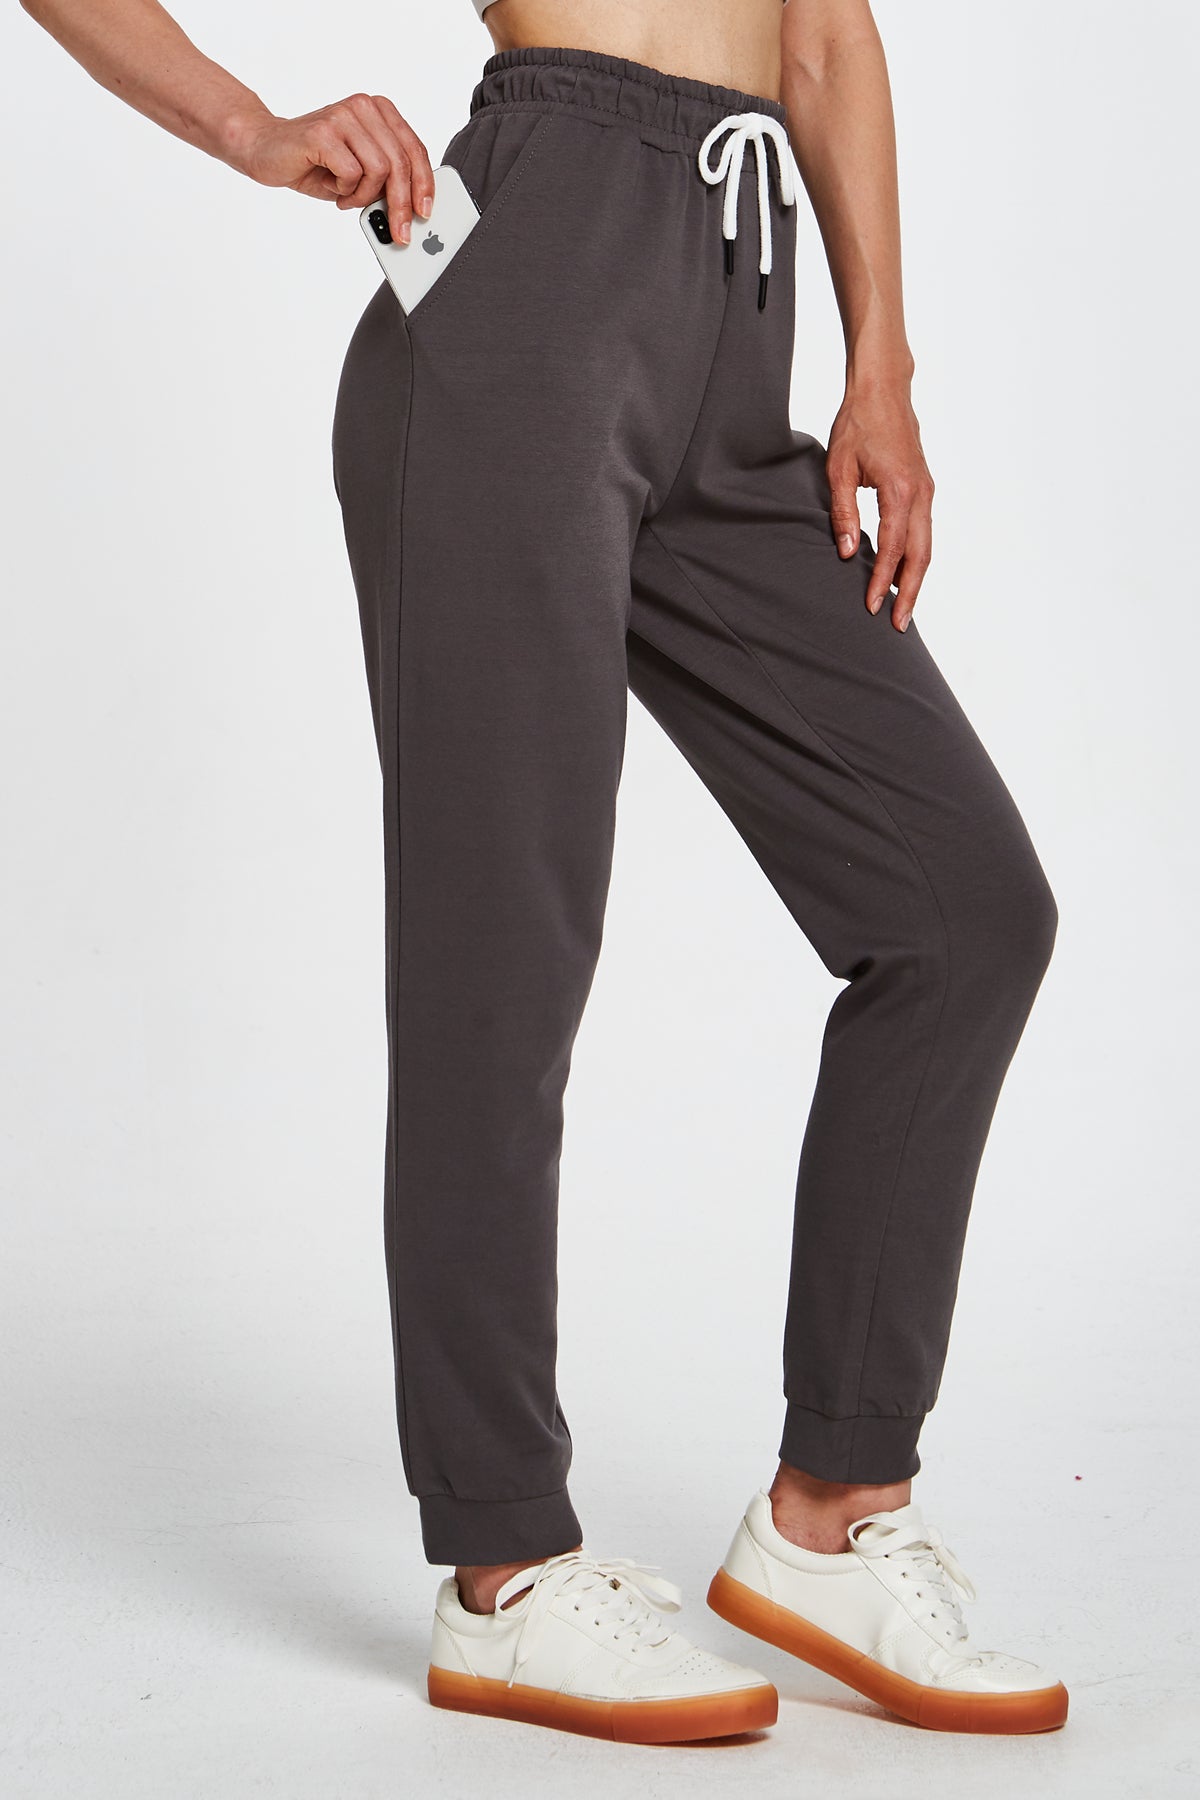 Women's Cotton Joggers Sweatpants with Pockets and Belt Loop Lounge Pants  Ladies Jogging Bottoms – PULI